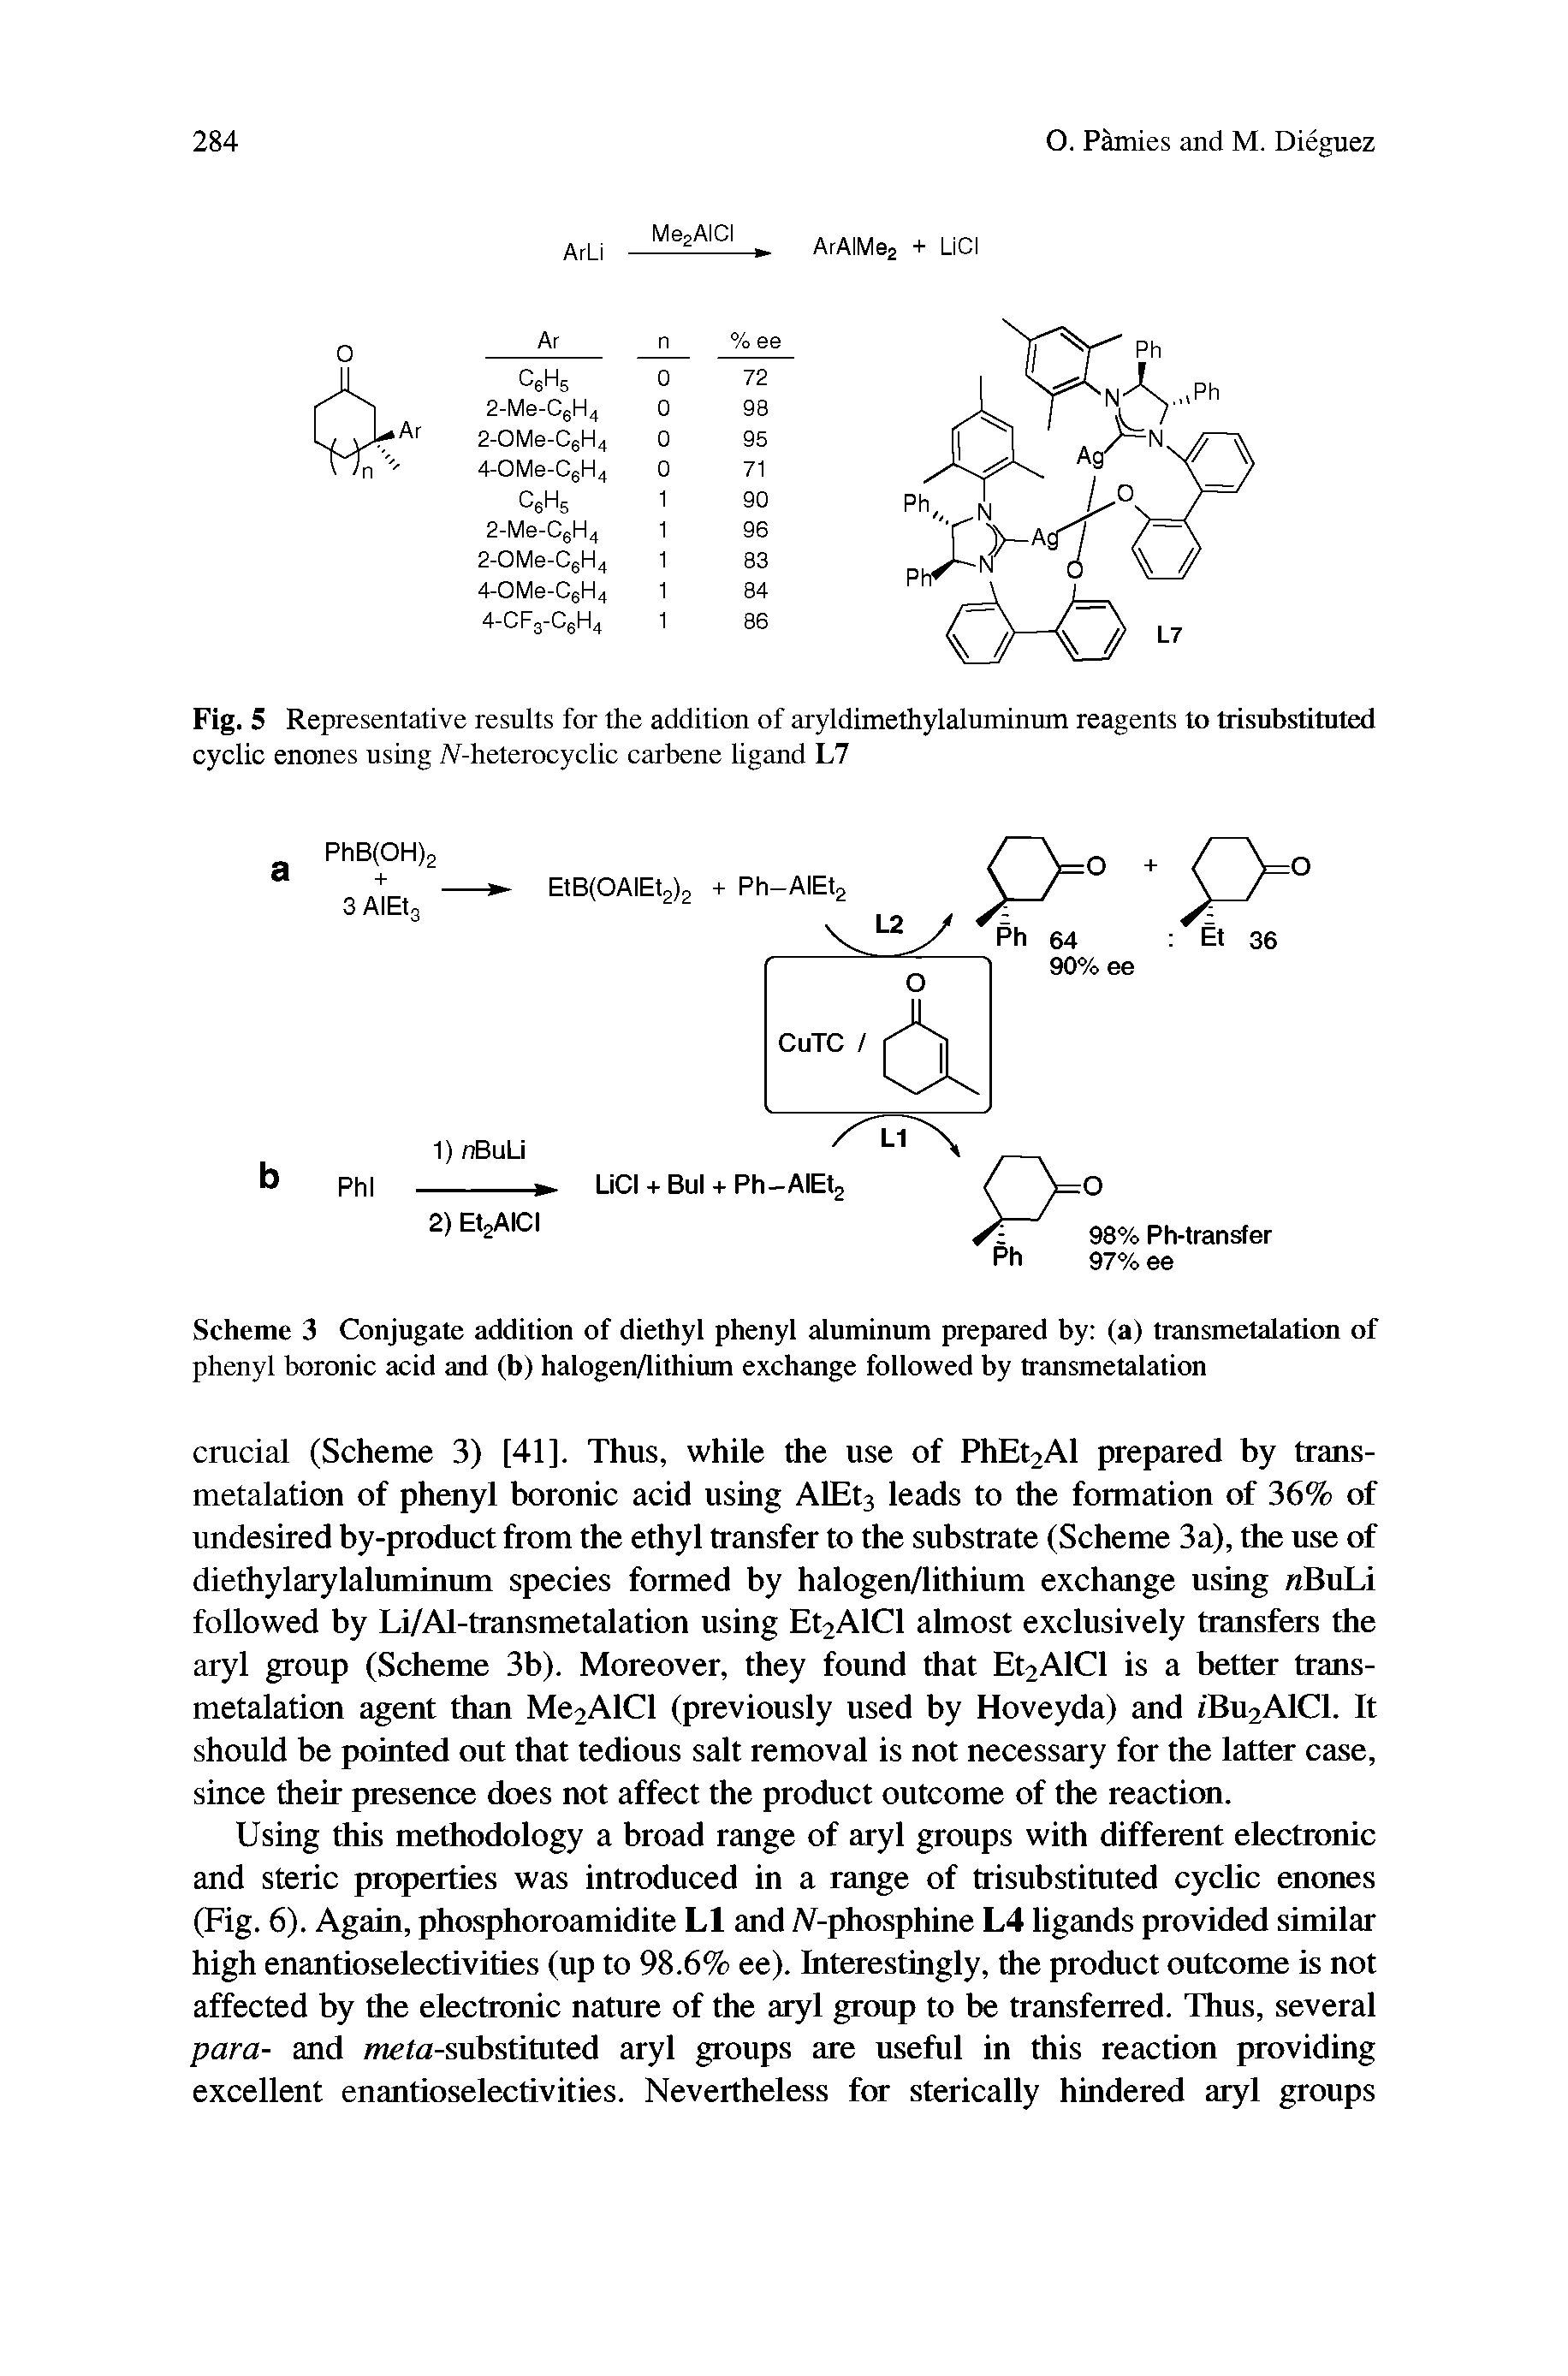 Scheme 3 Conjugate addition of diethyl phenyl aluminum prepared by (a) transmetalation of phenyl boronic acid and (b) halogen/lithium exchange followed by transmetalation...